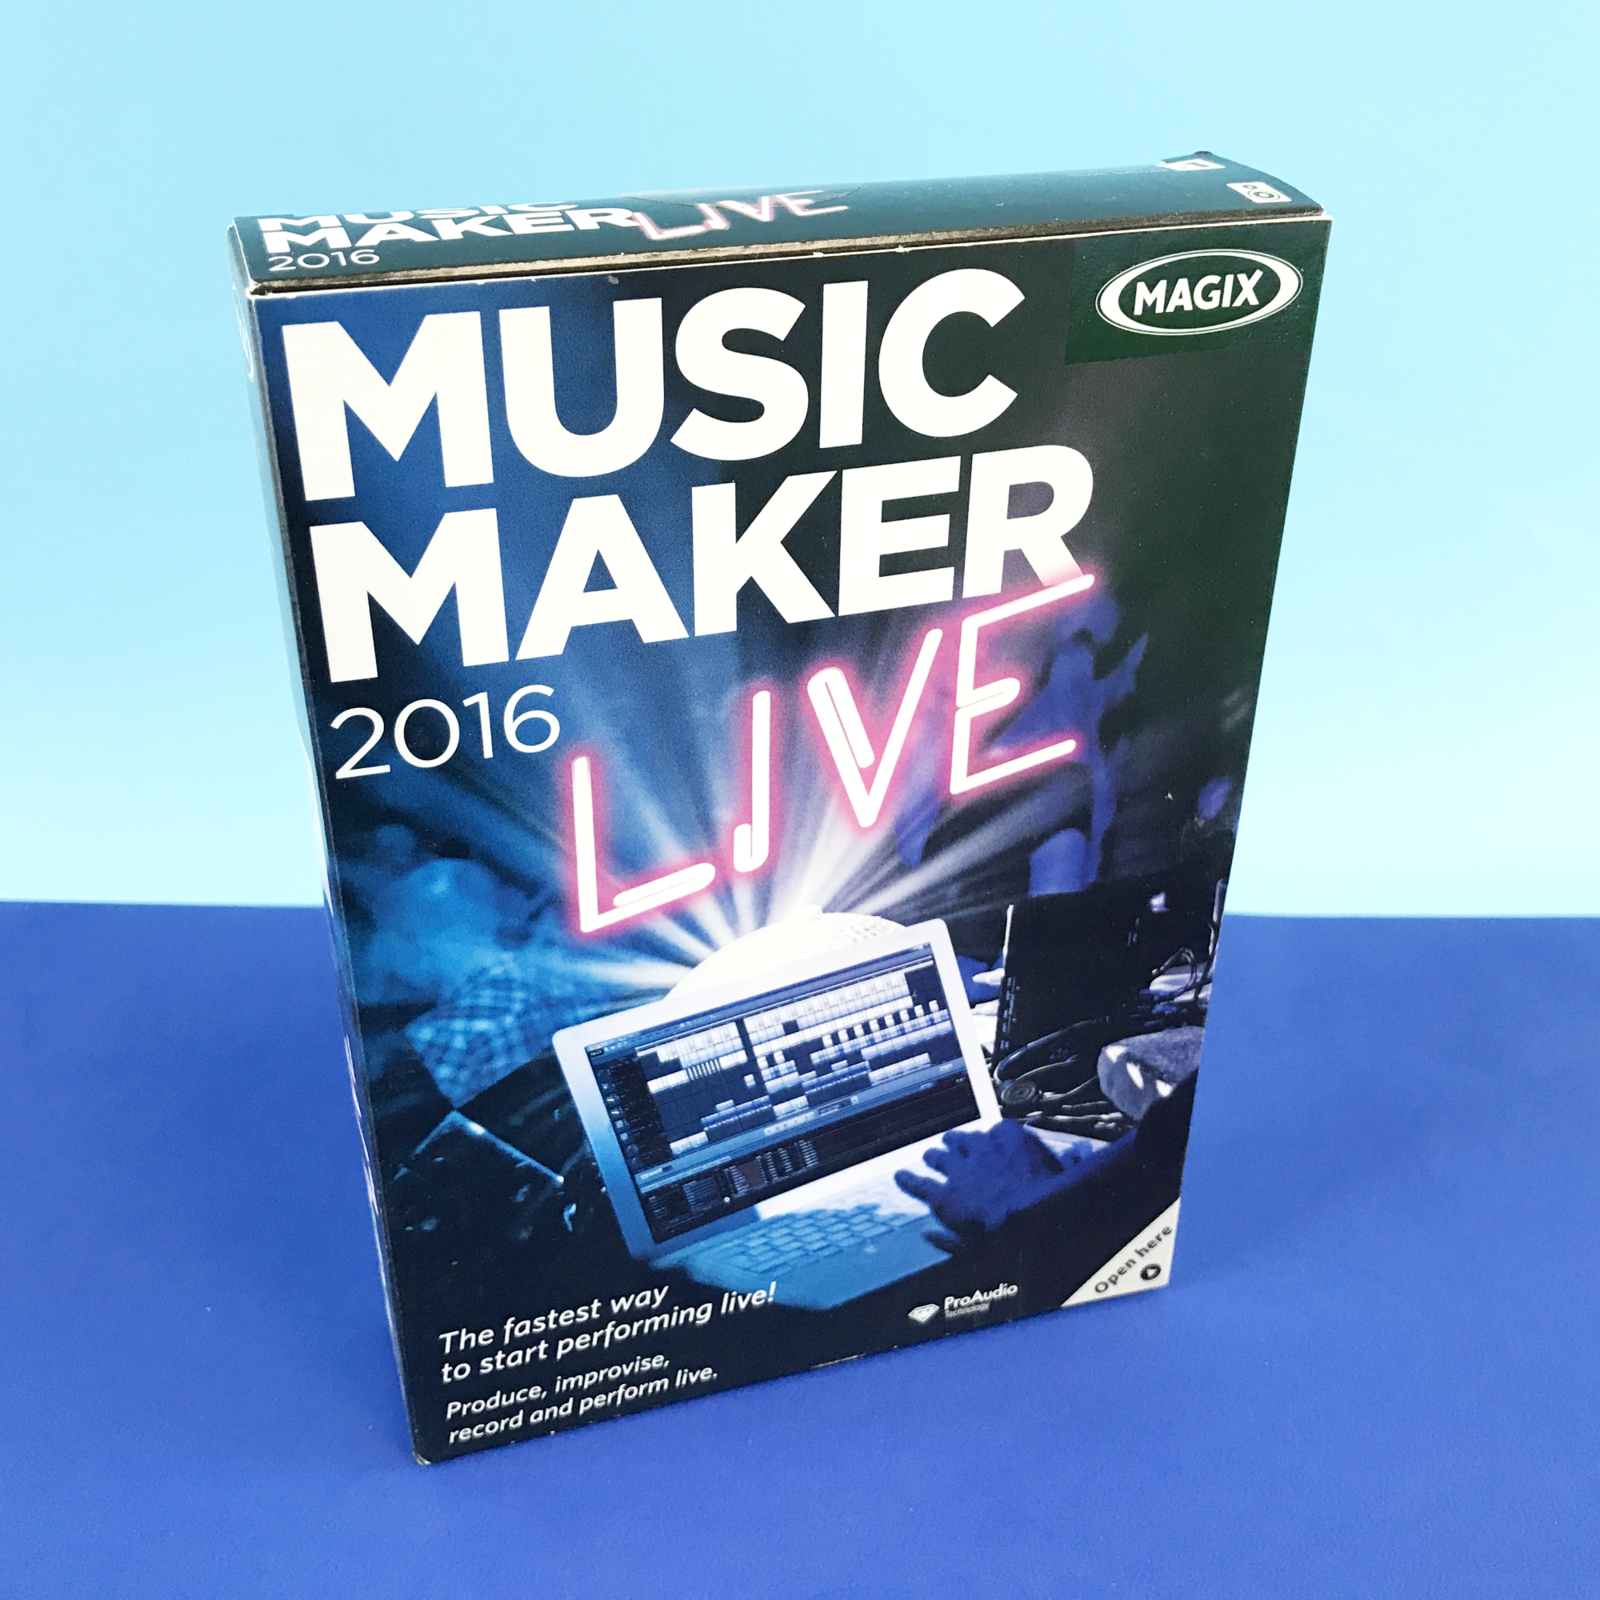 magix music maker 2016 live